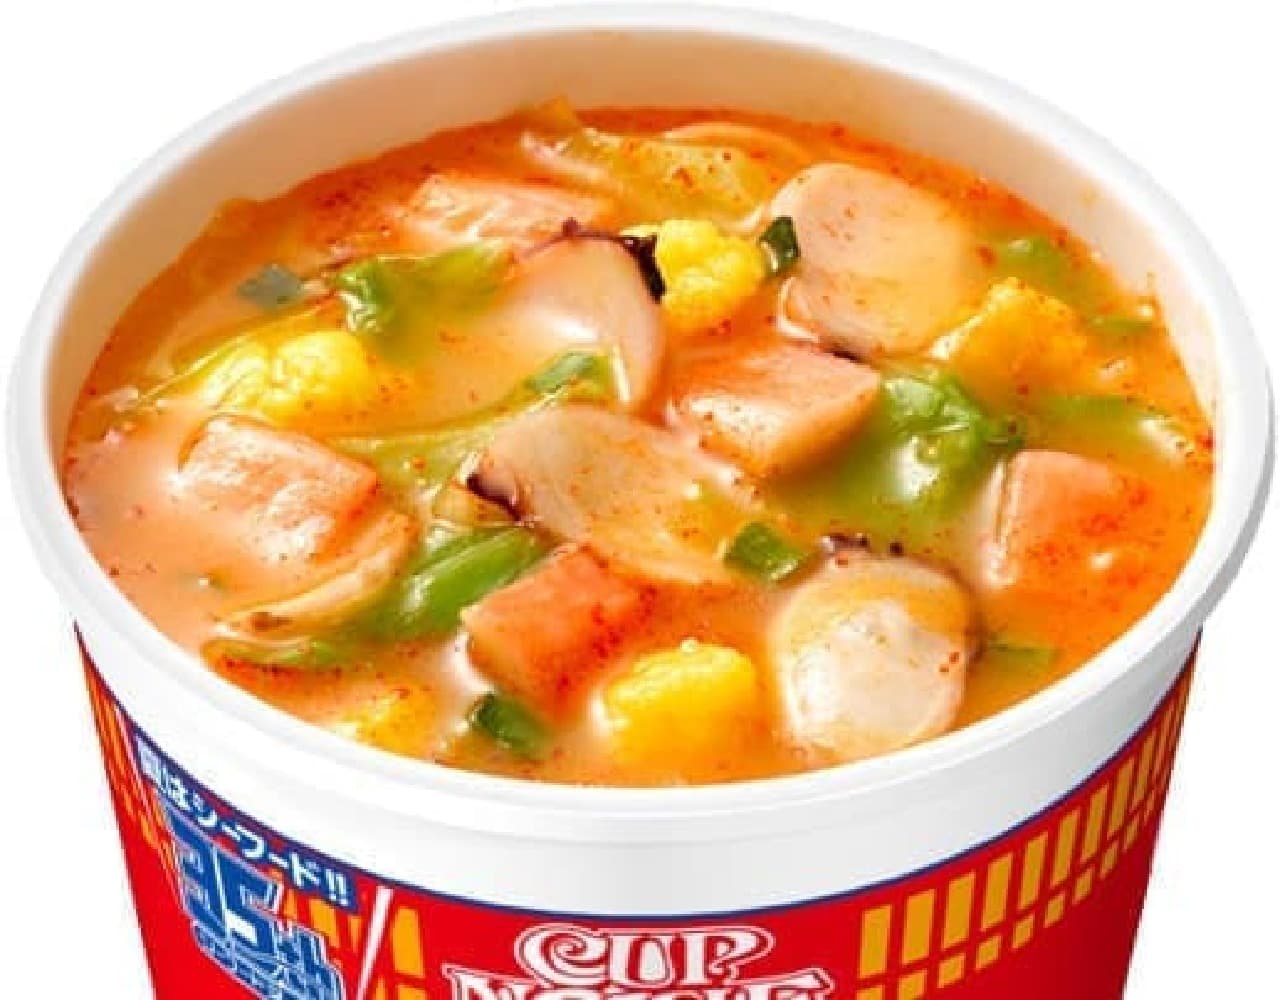 Nissin Foods "Cup Noodle Red Seafood Noodle"